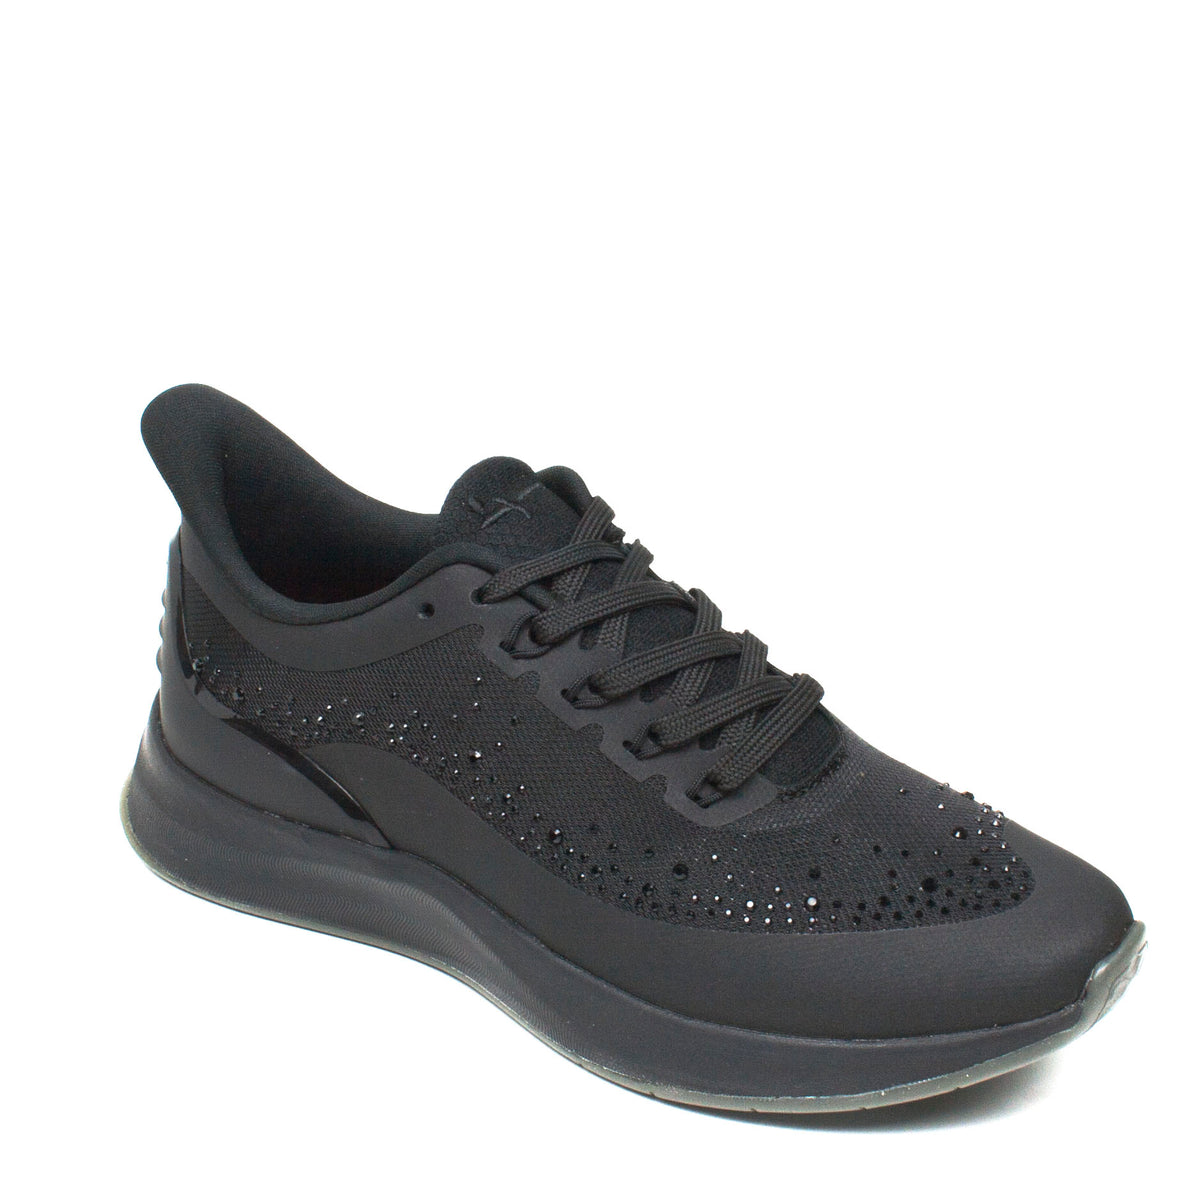 Tamaris pantofi dama sport Footbed negru ID1862-NG